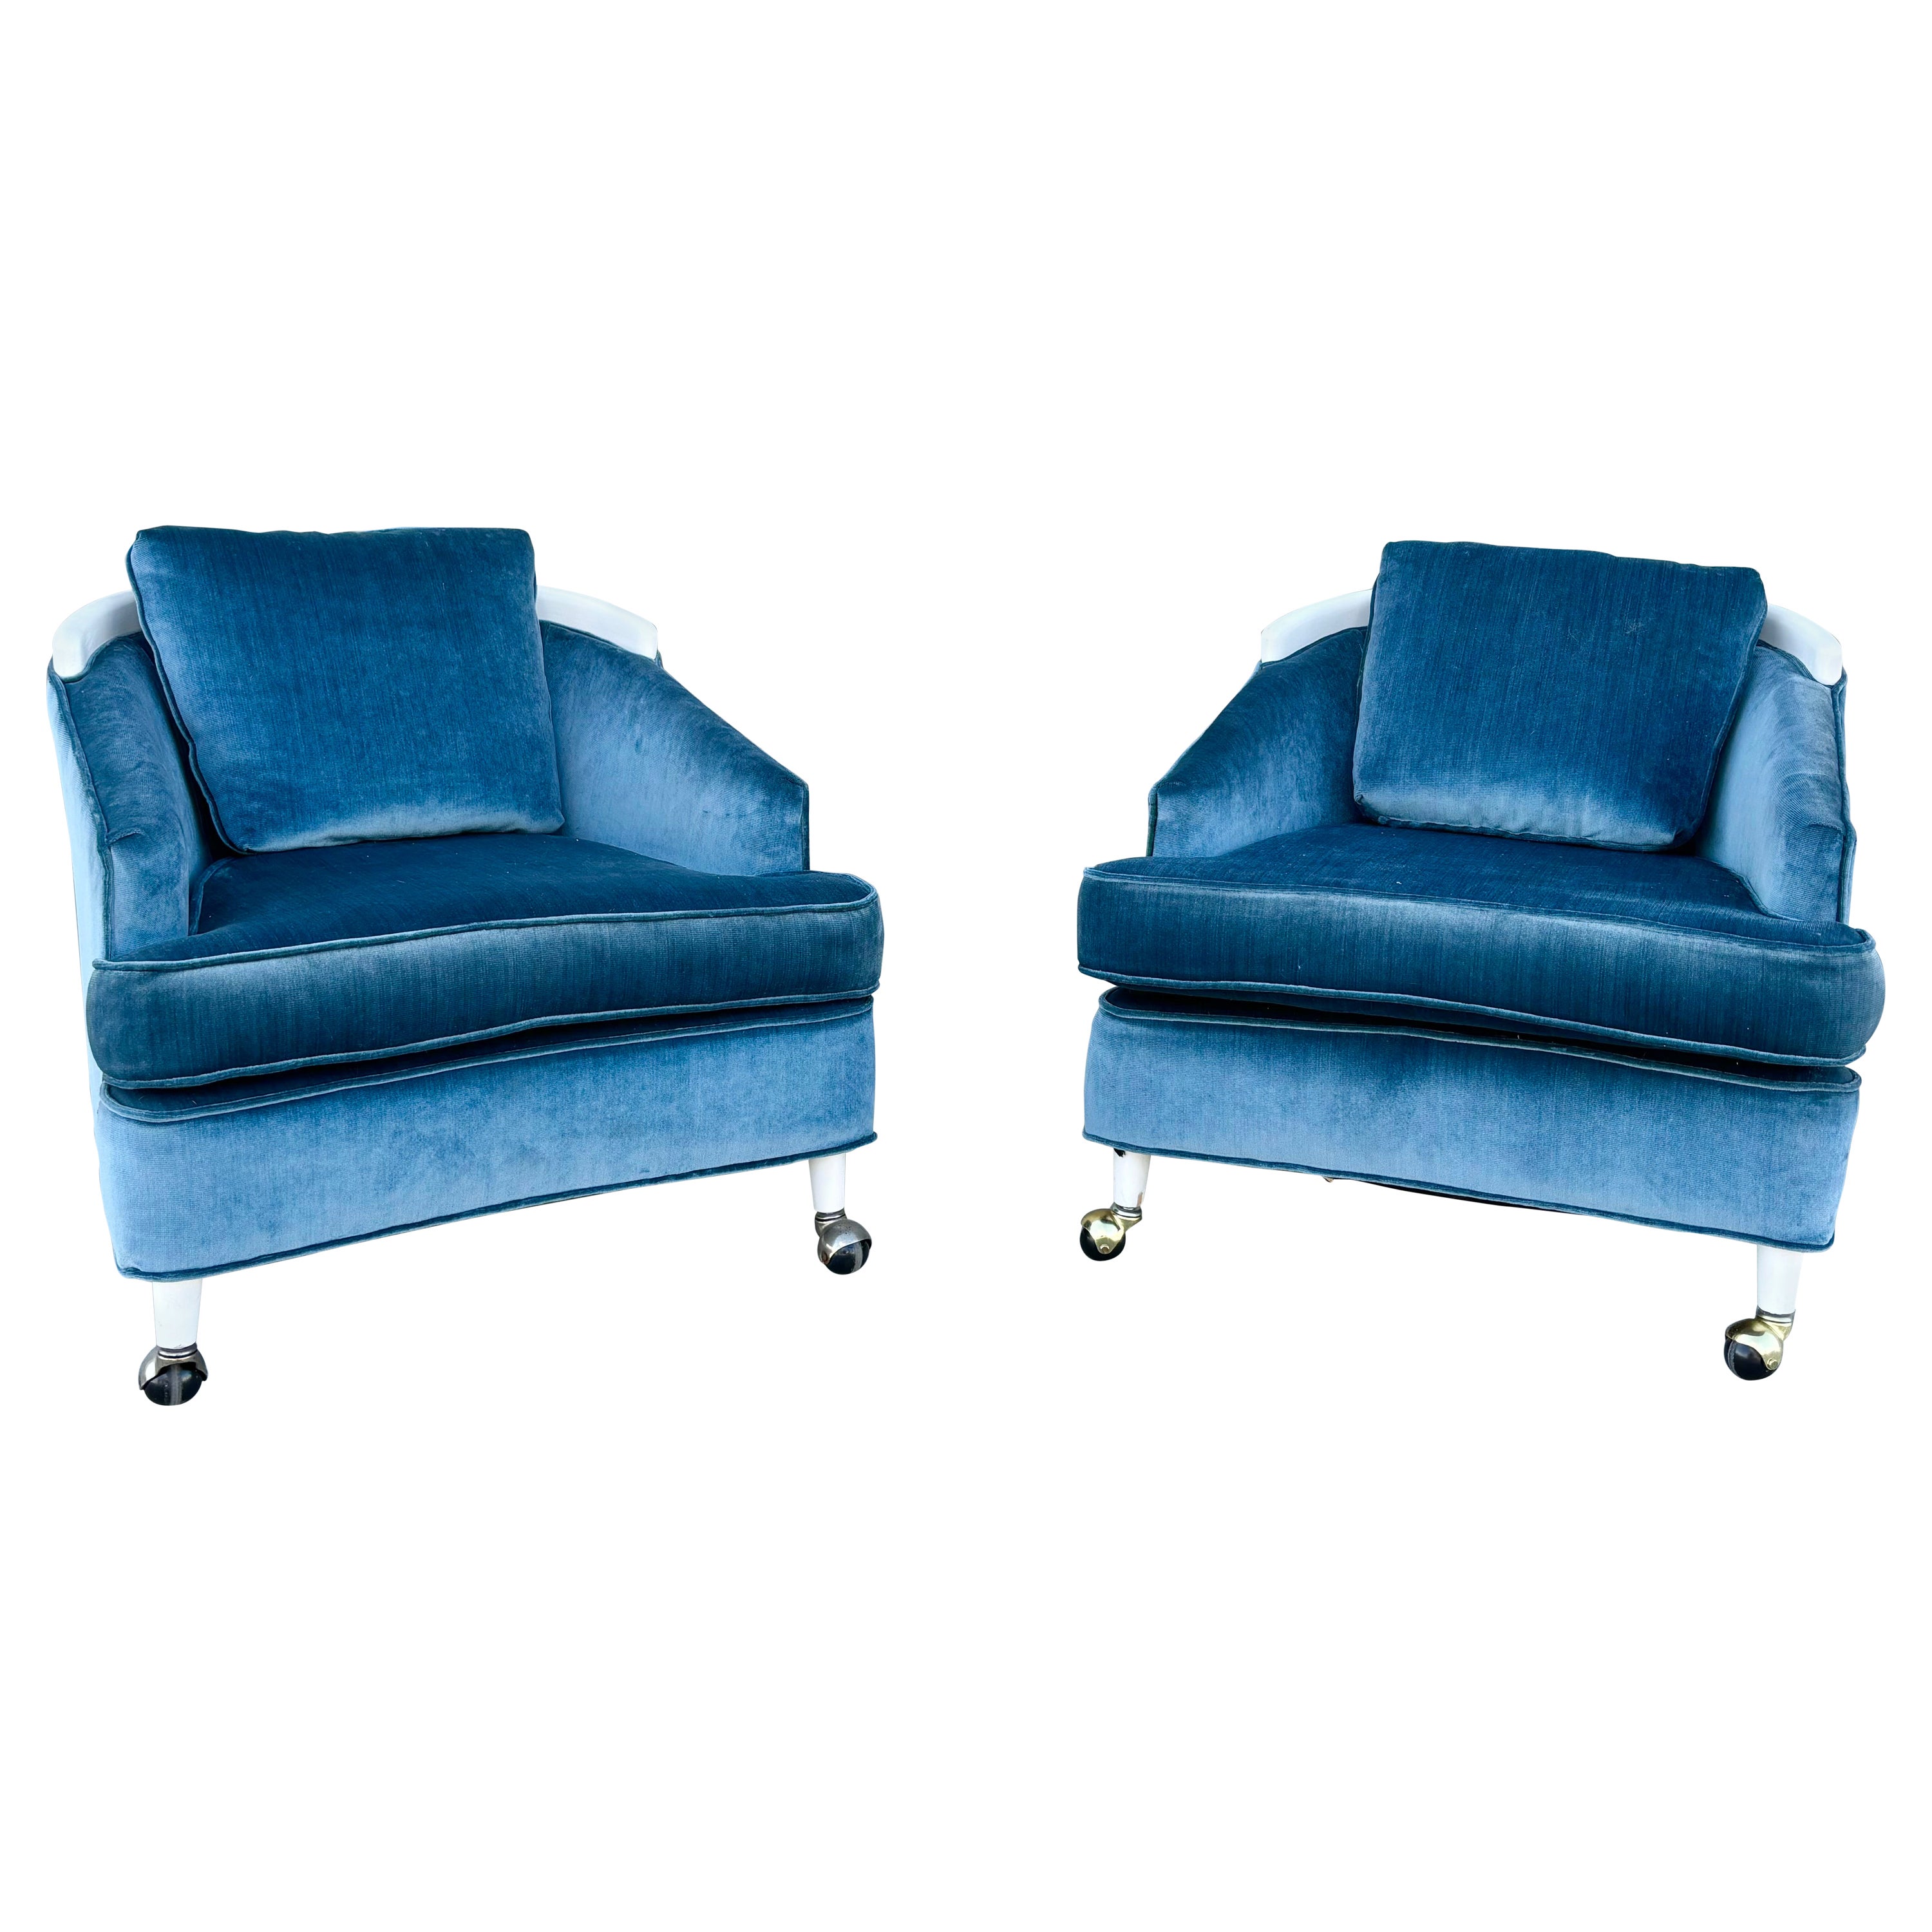 1960s Mid Century Modern Velvet Lounge Chairs - Set of 2 For Sale